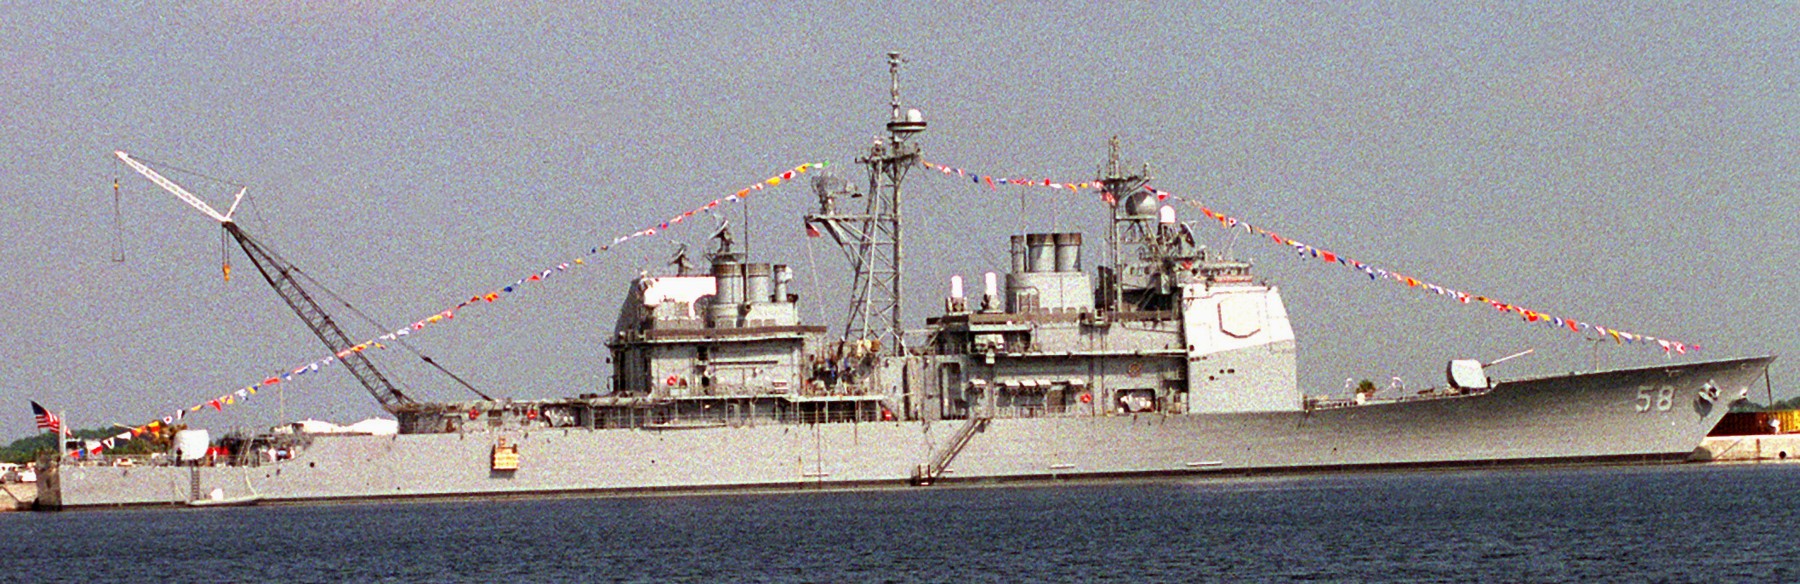 cg-58 uss philippine sea ticonderoga class guided missile cruiser aegis us navy 86